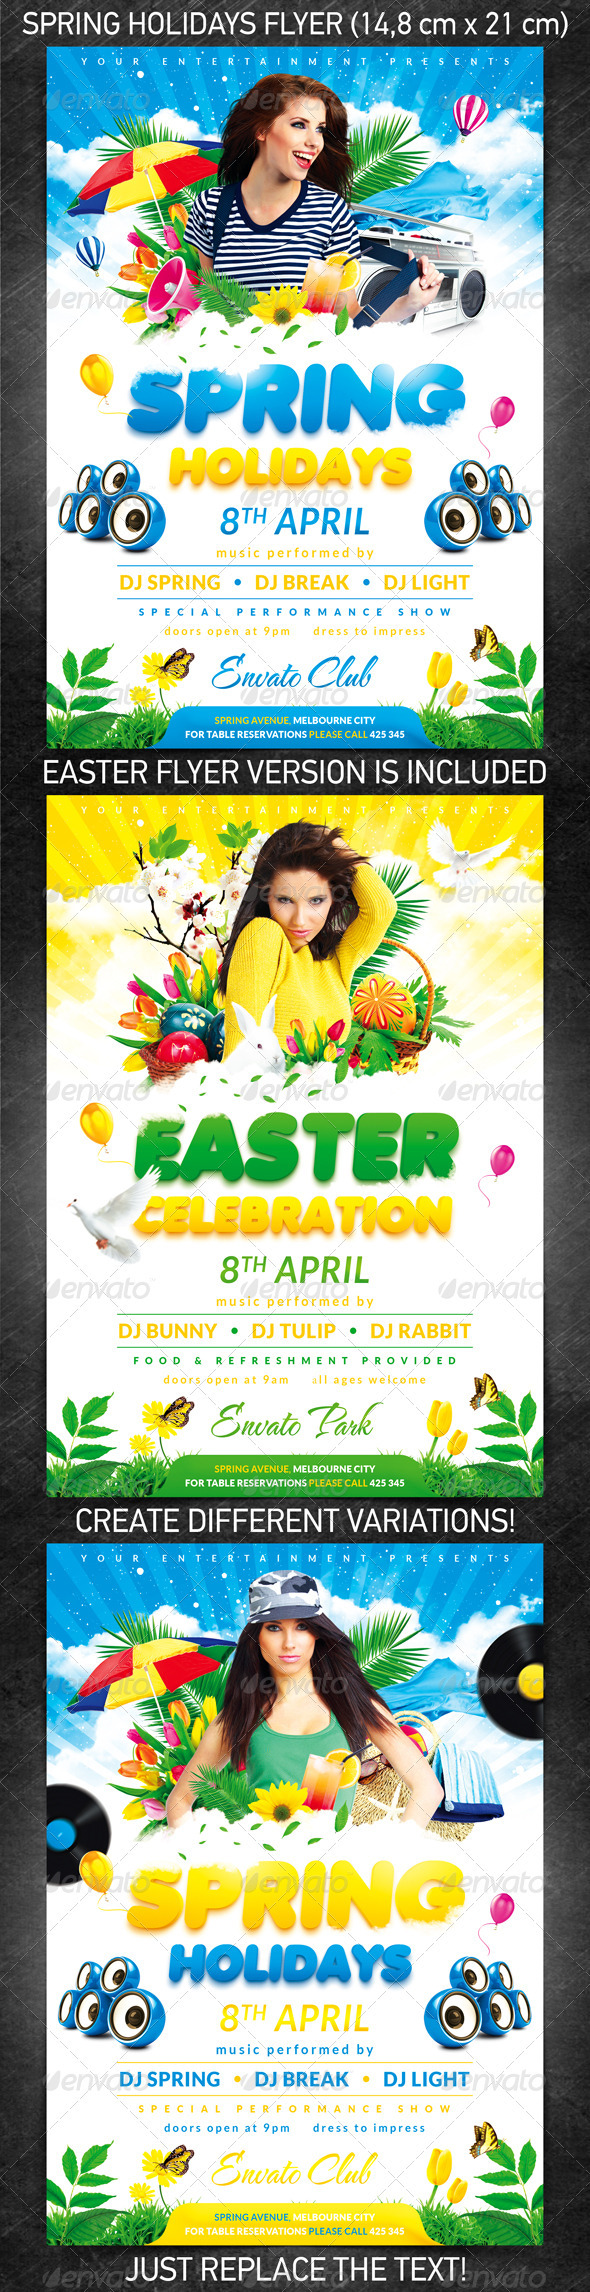 Spring Holidays/Easter Celebration Party Flyer